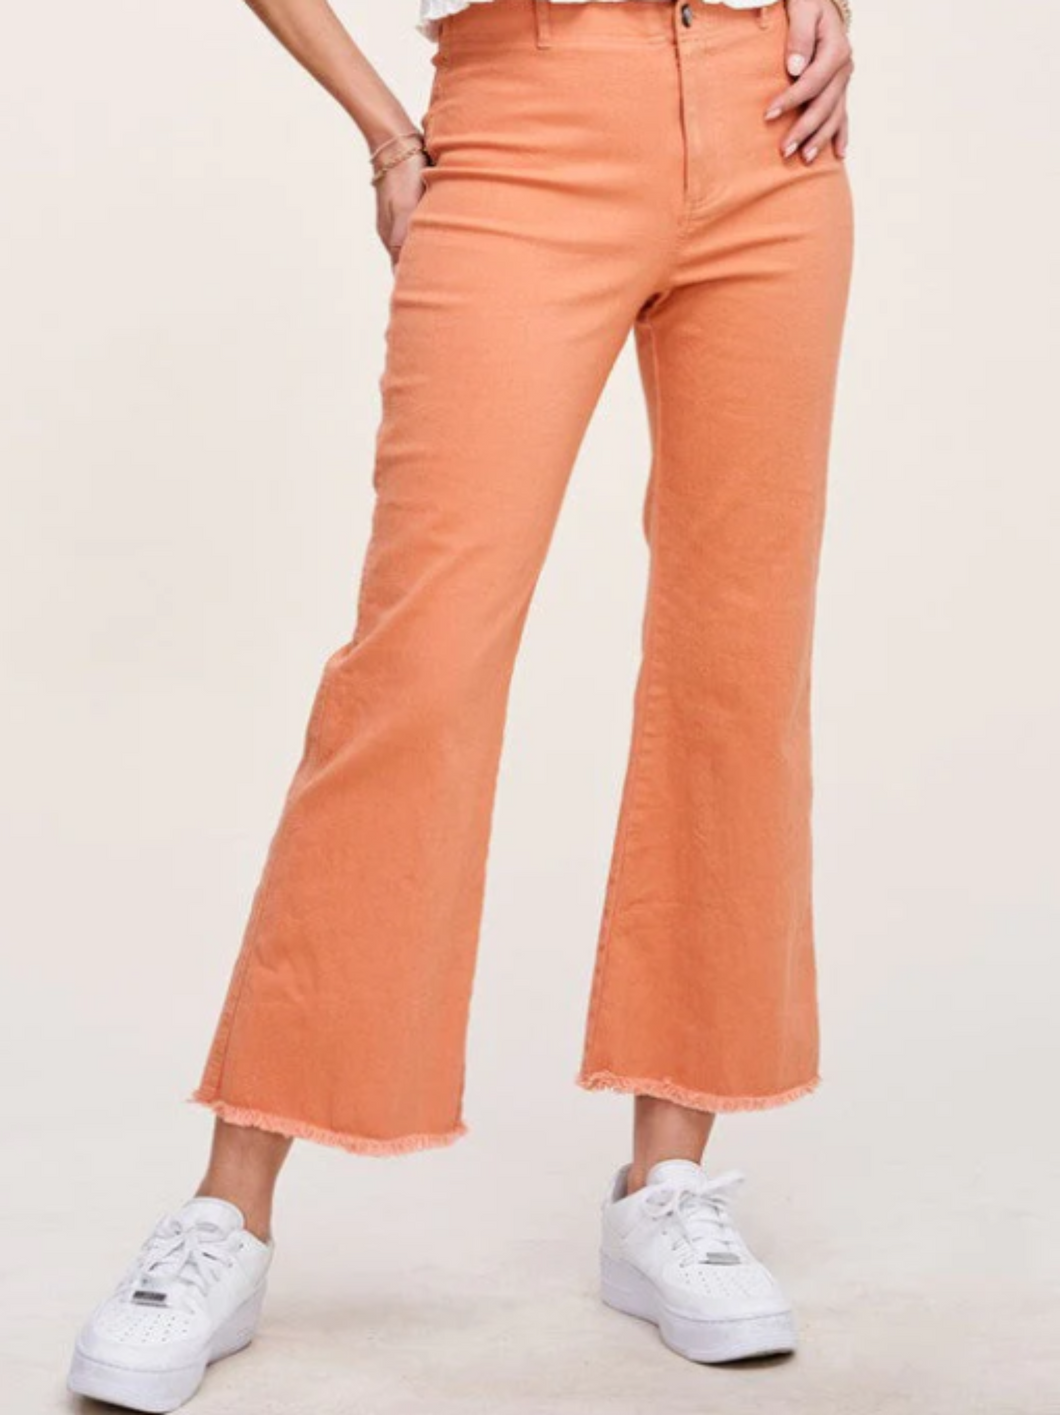 Mia Jeans: Orange